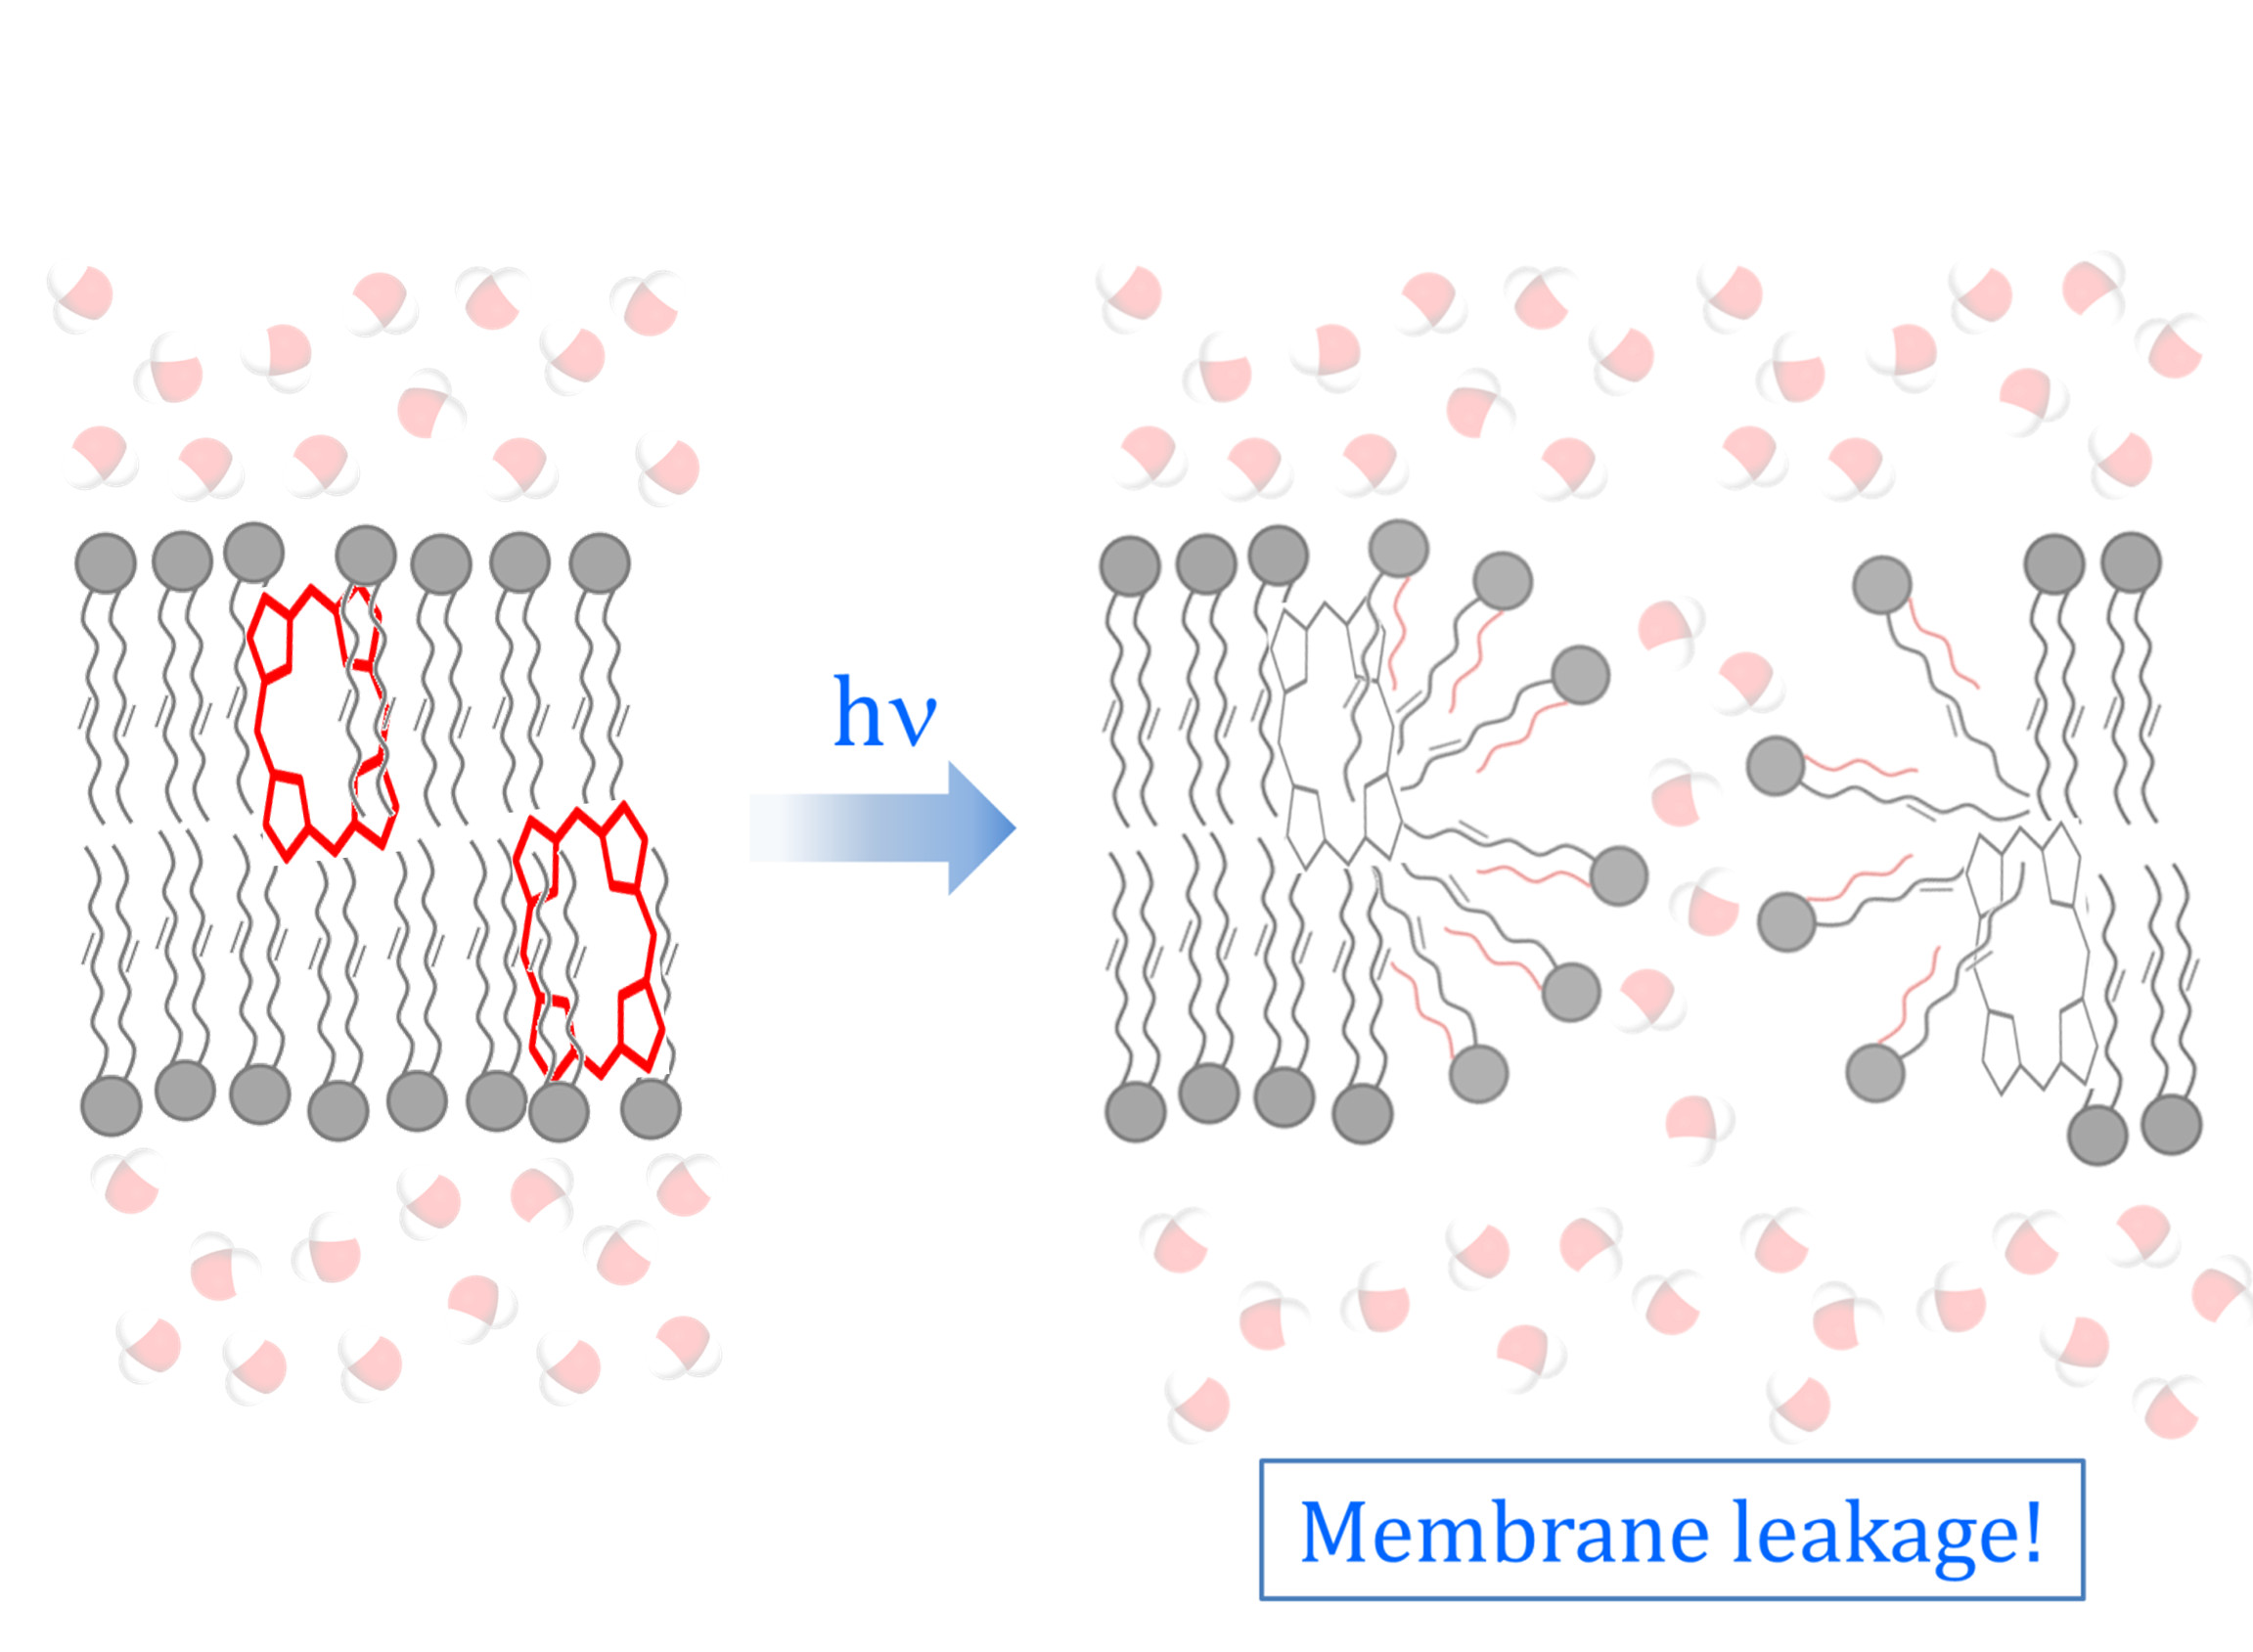 Membrane leakage